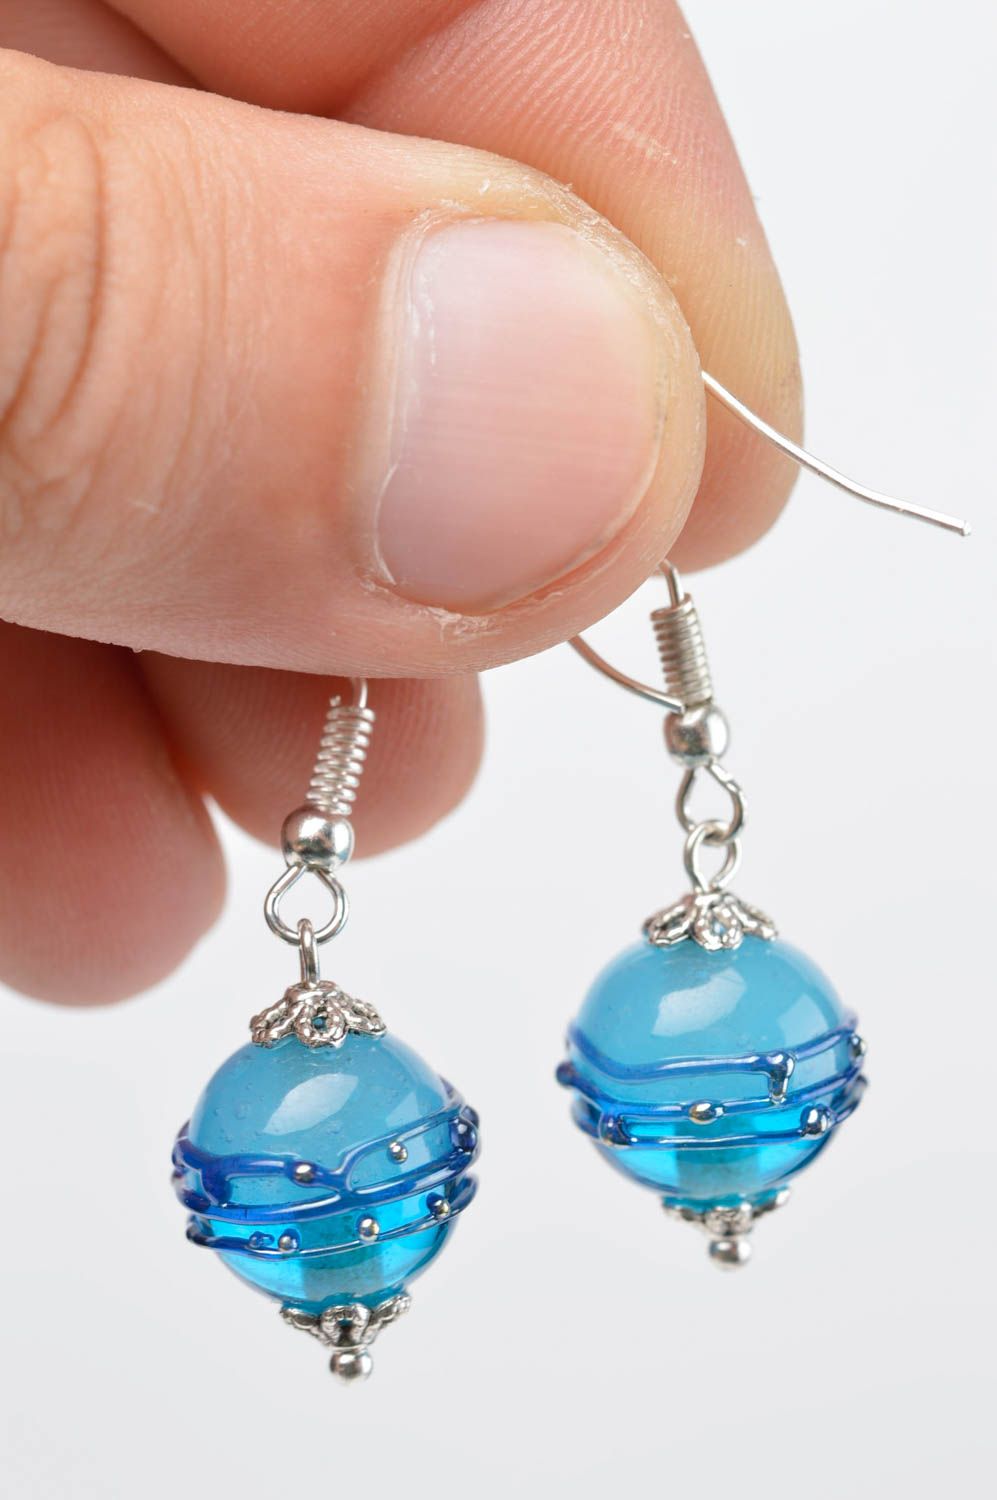 Unusual handmade glass earrings fashion accessories cool jewelry designs photo 5